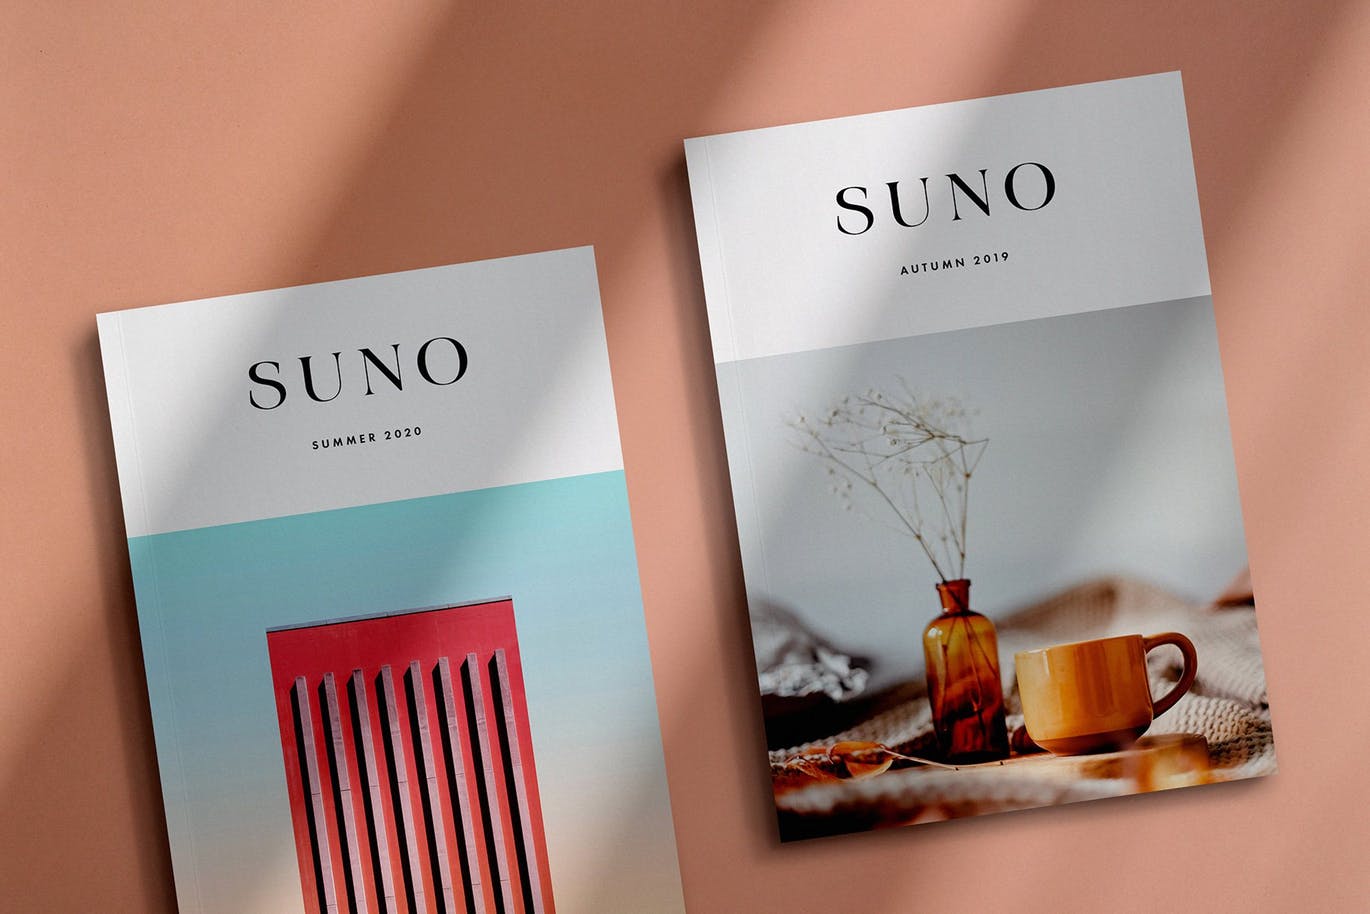 北欧简约时尚风格杂志设计效果图样机 Suno Magazine Mockup Kit插图(2)